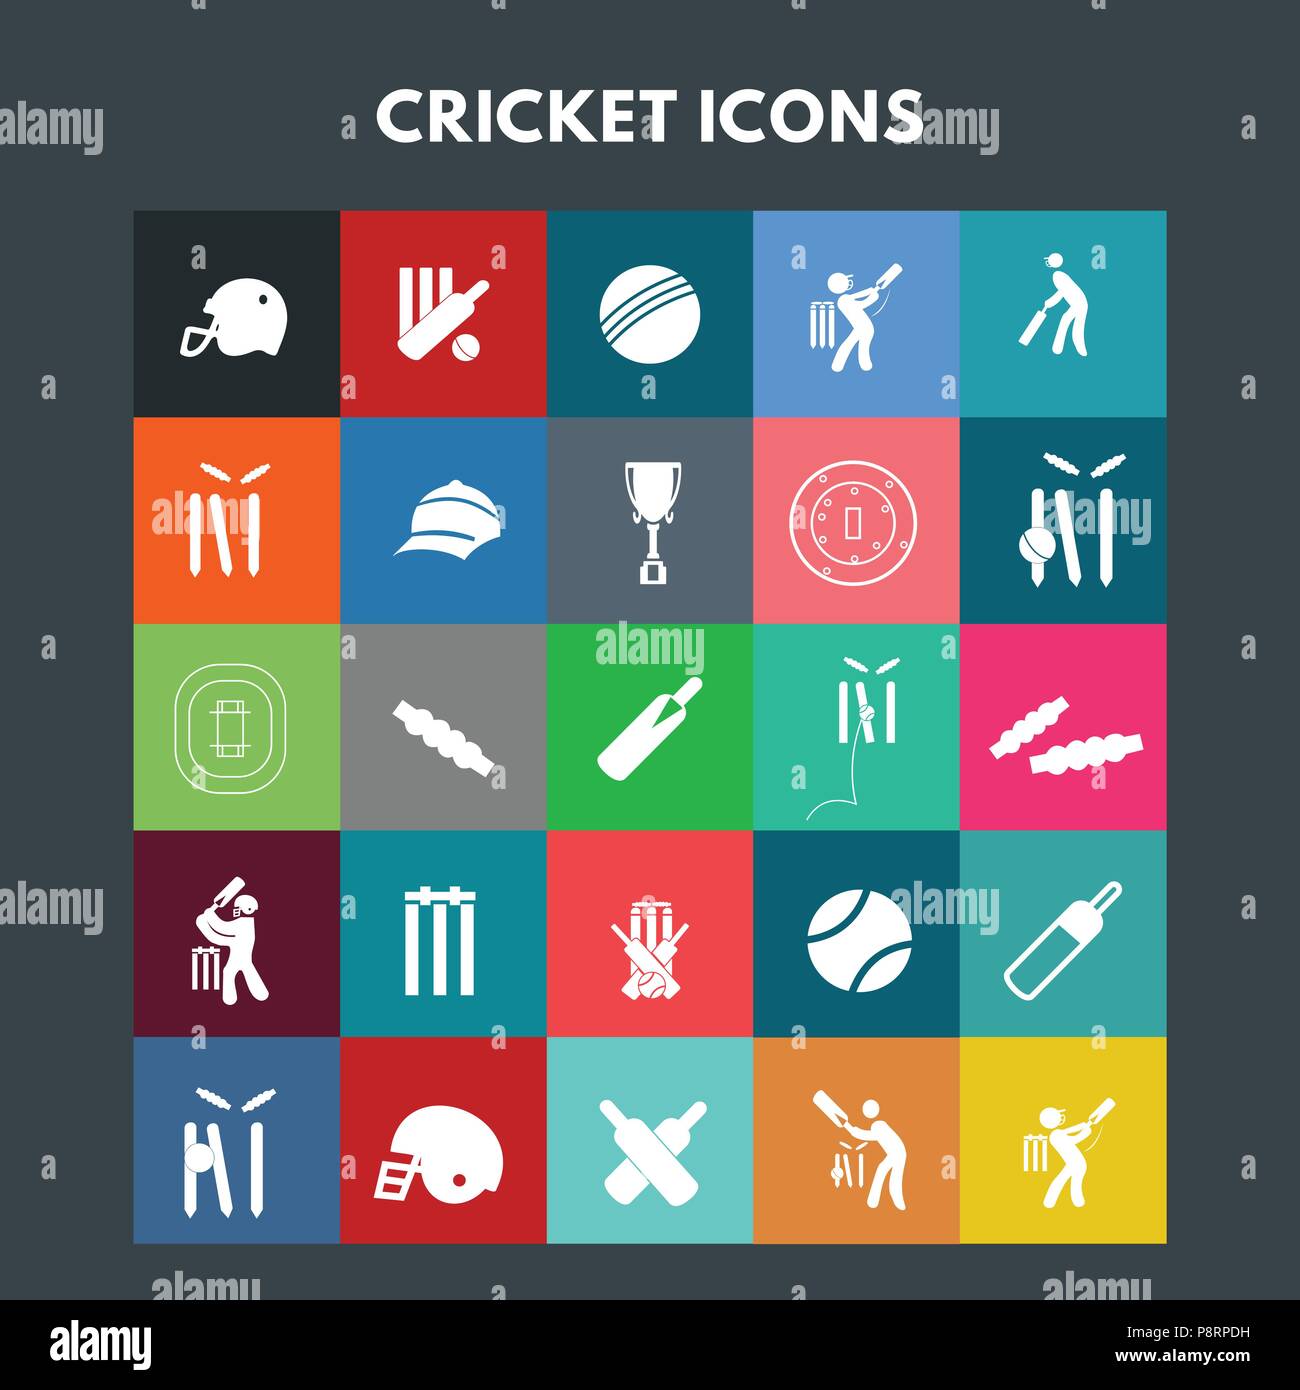 Cricket Icons